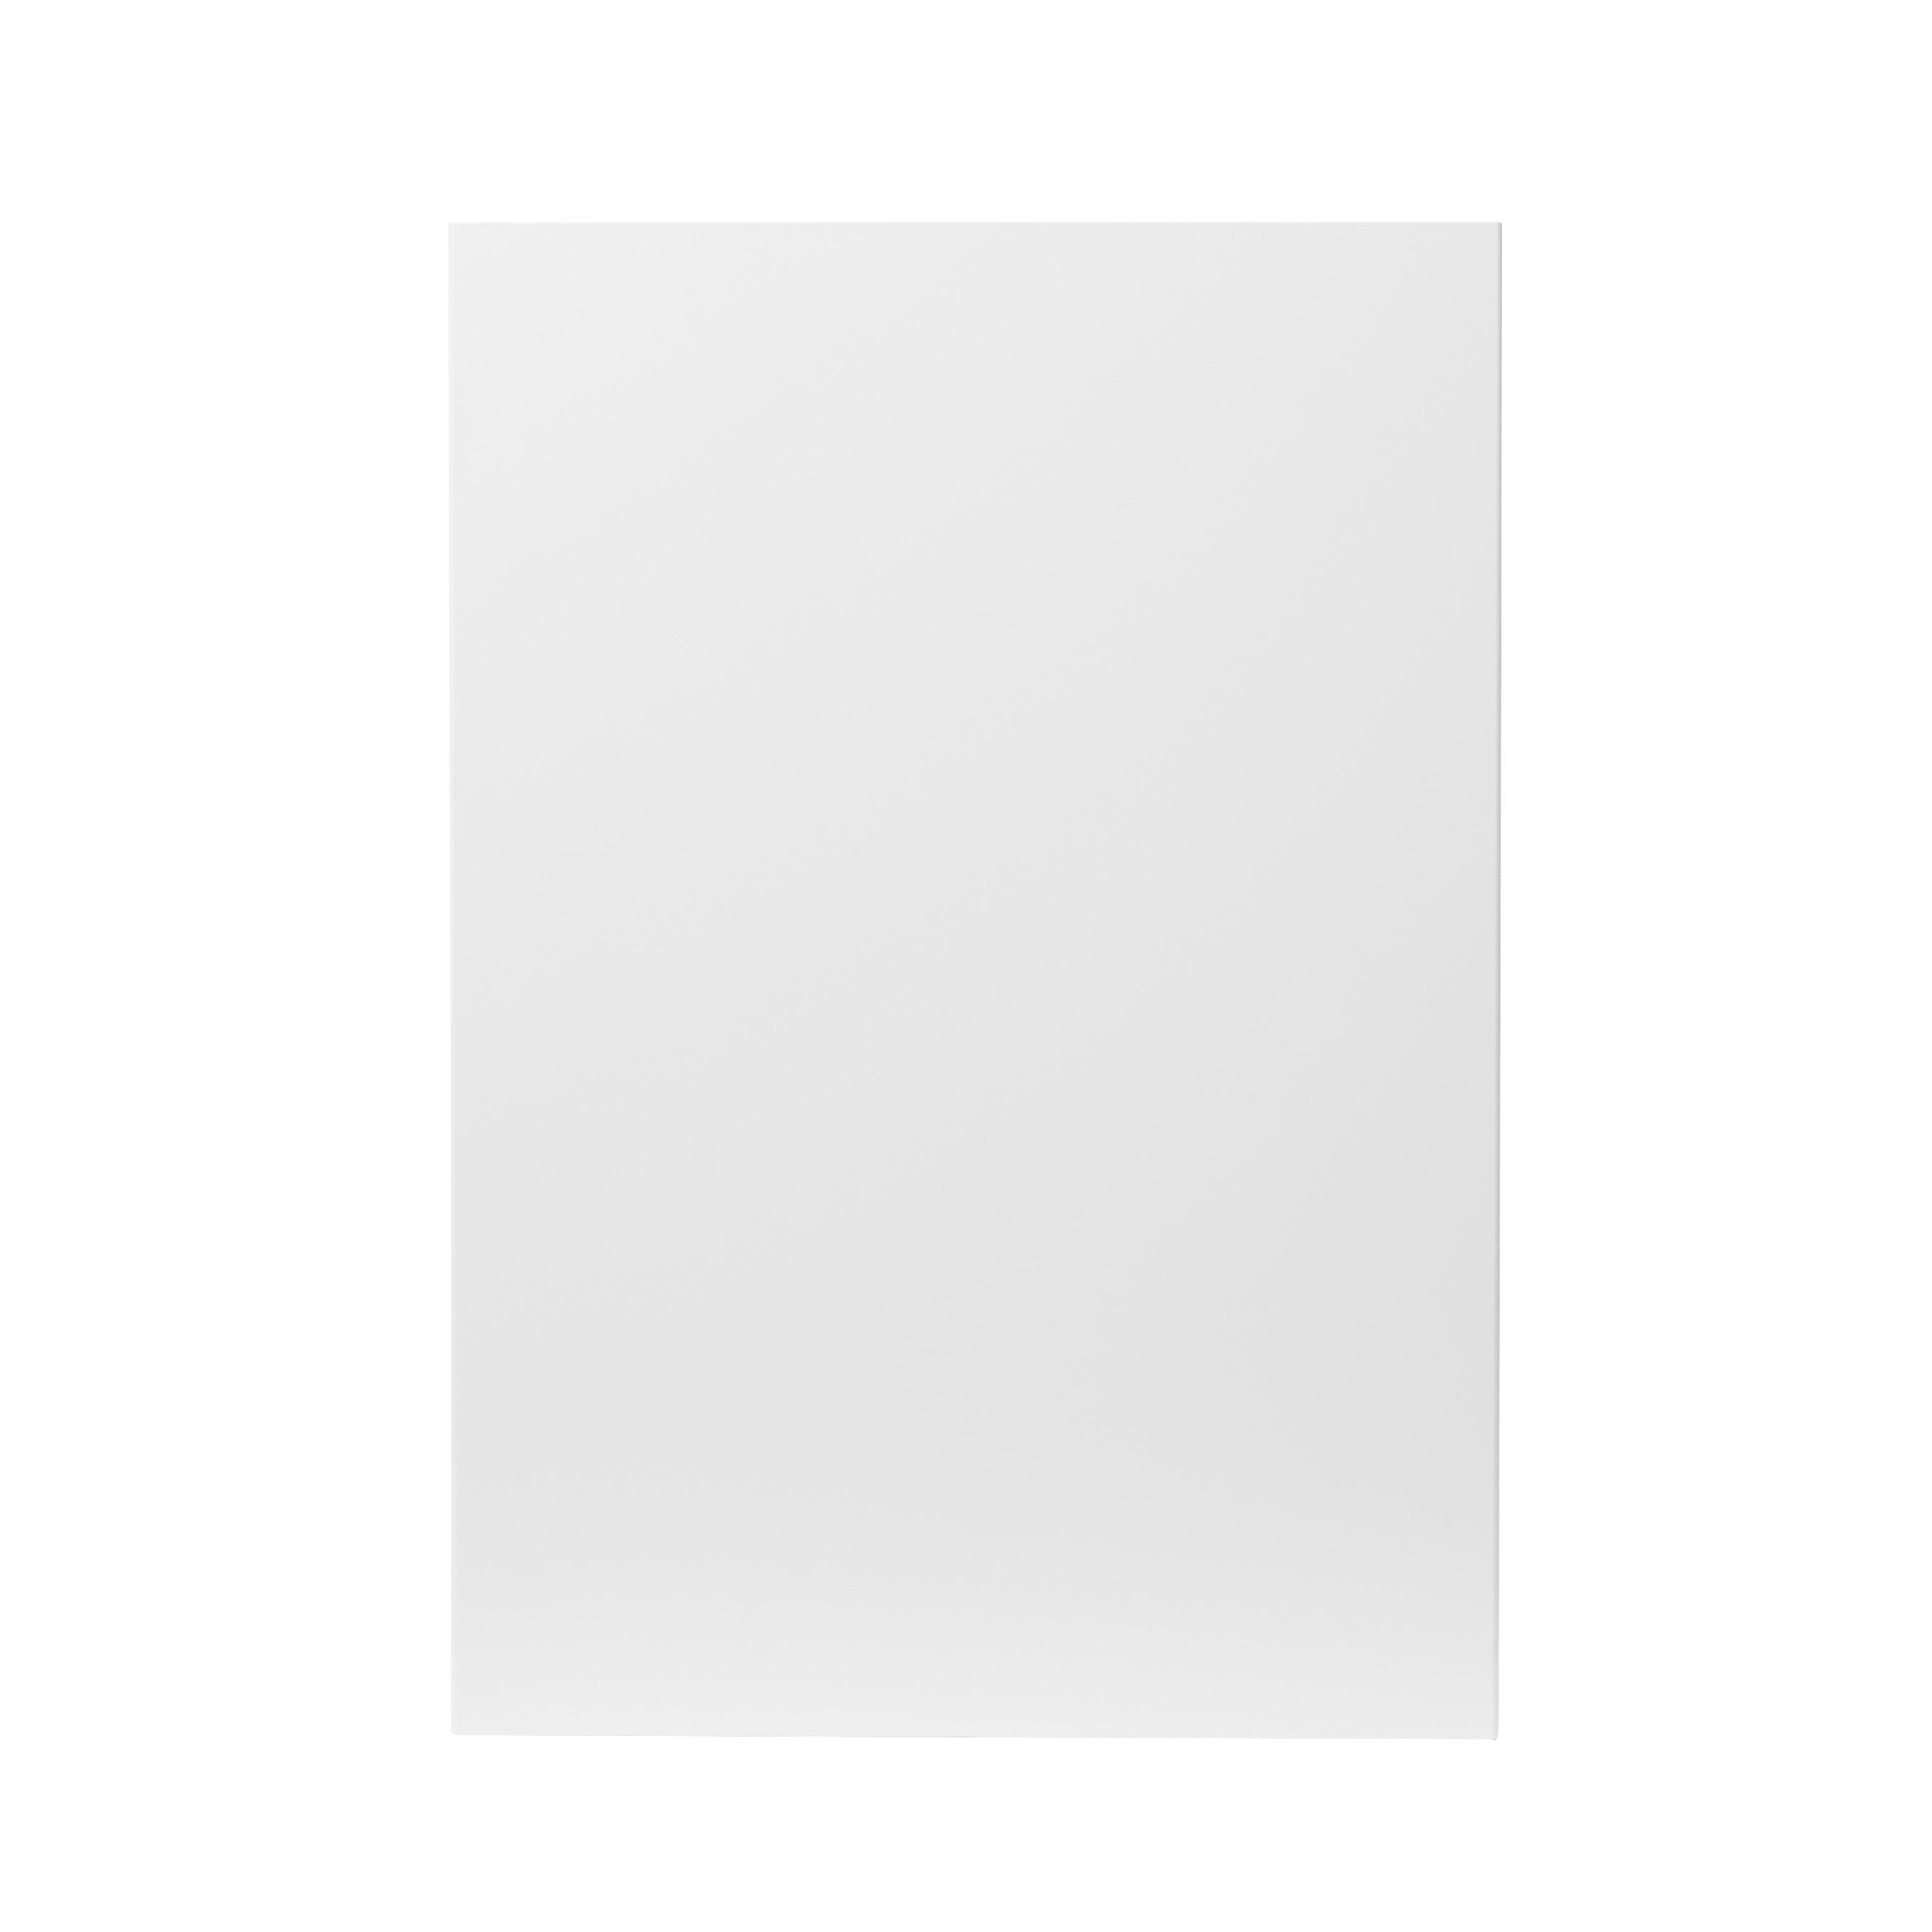 GoodHome Stevia Gloss white slab Highline Cabinet door (W)500mm (H)715mm (T)18mm